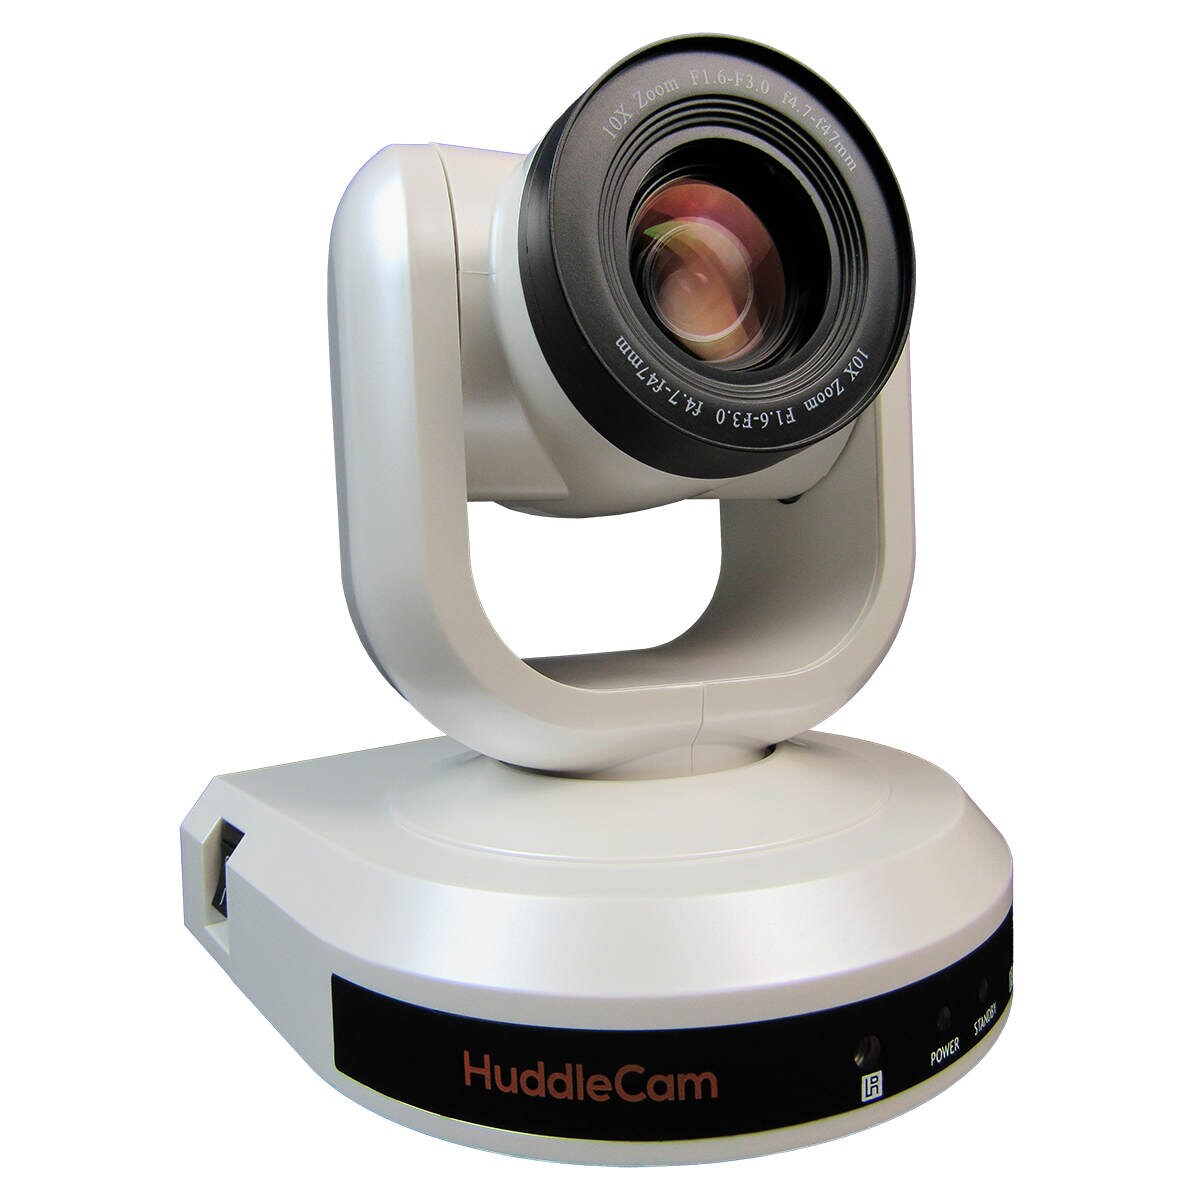 HuddleCamHD HC10X-WH-G3 PTZ Camera - White